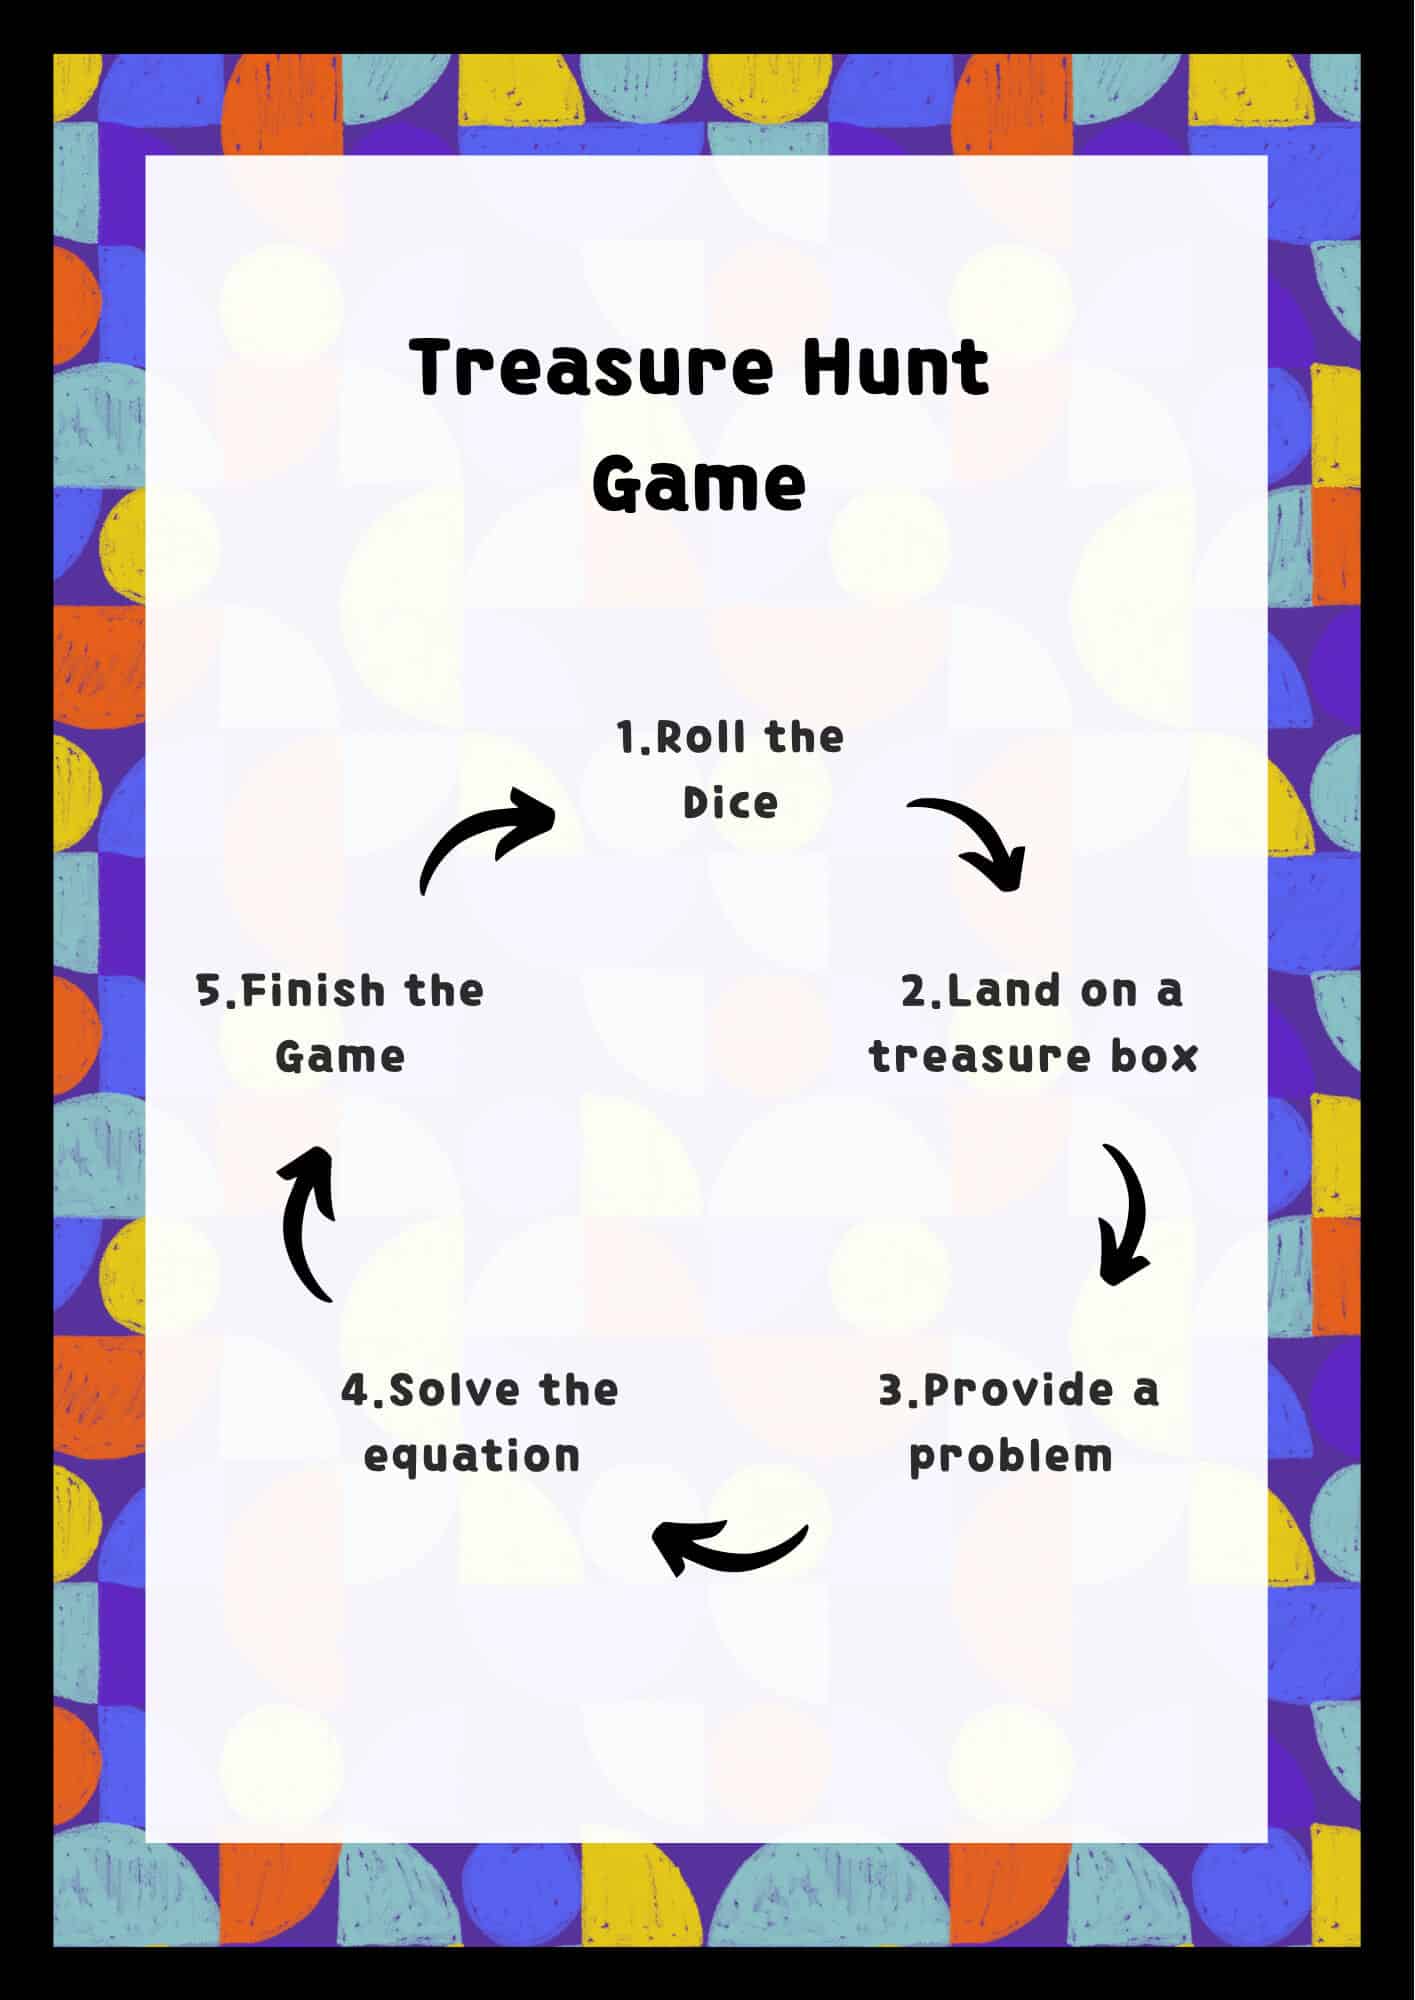 treasure hunt game steps